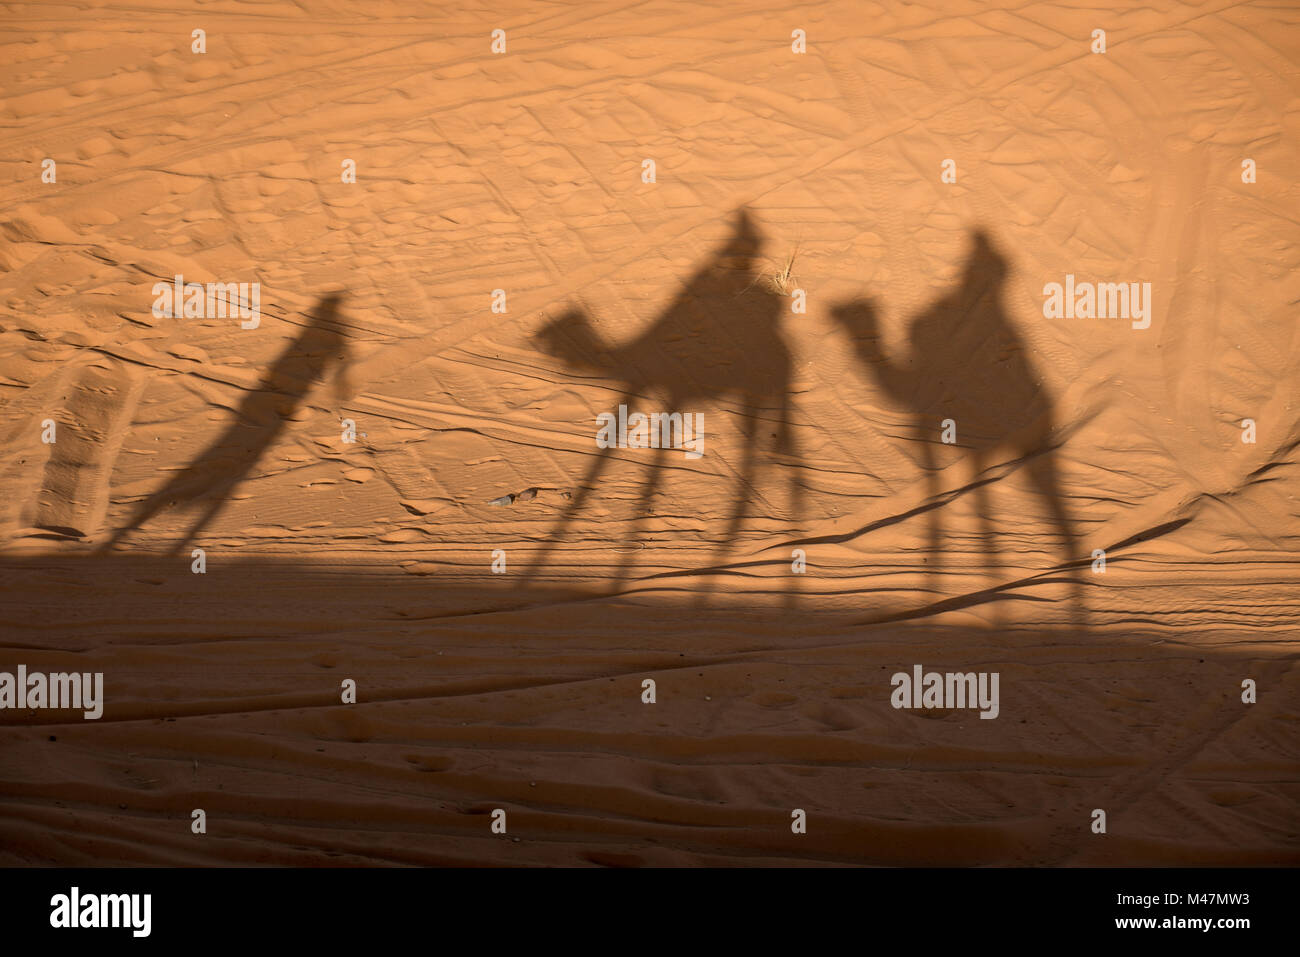 Camel shadows on Sahara Desert sand in Morocco. Stock Photo